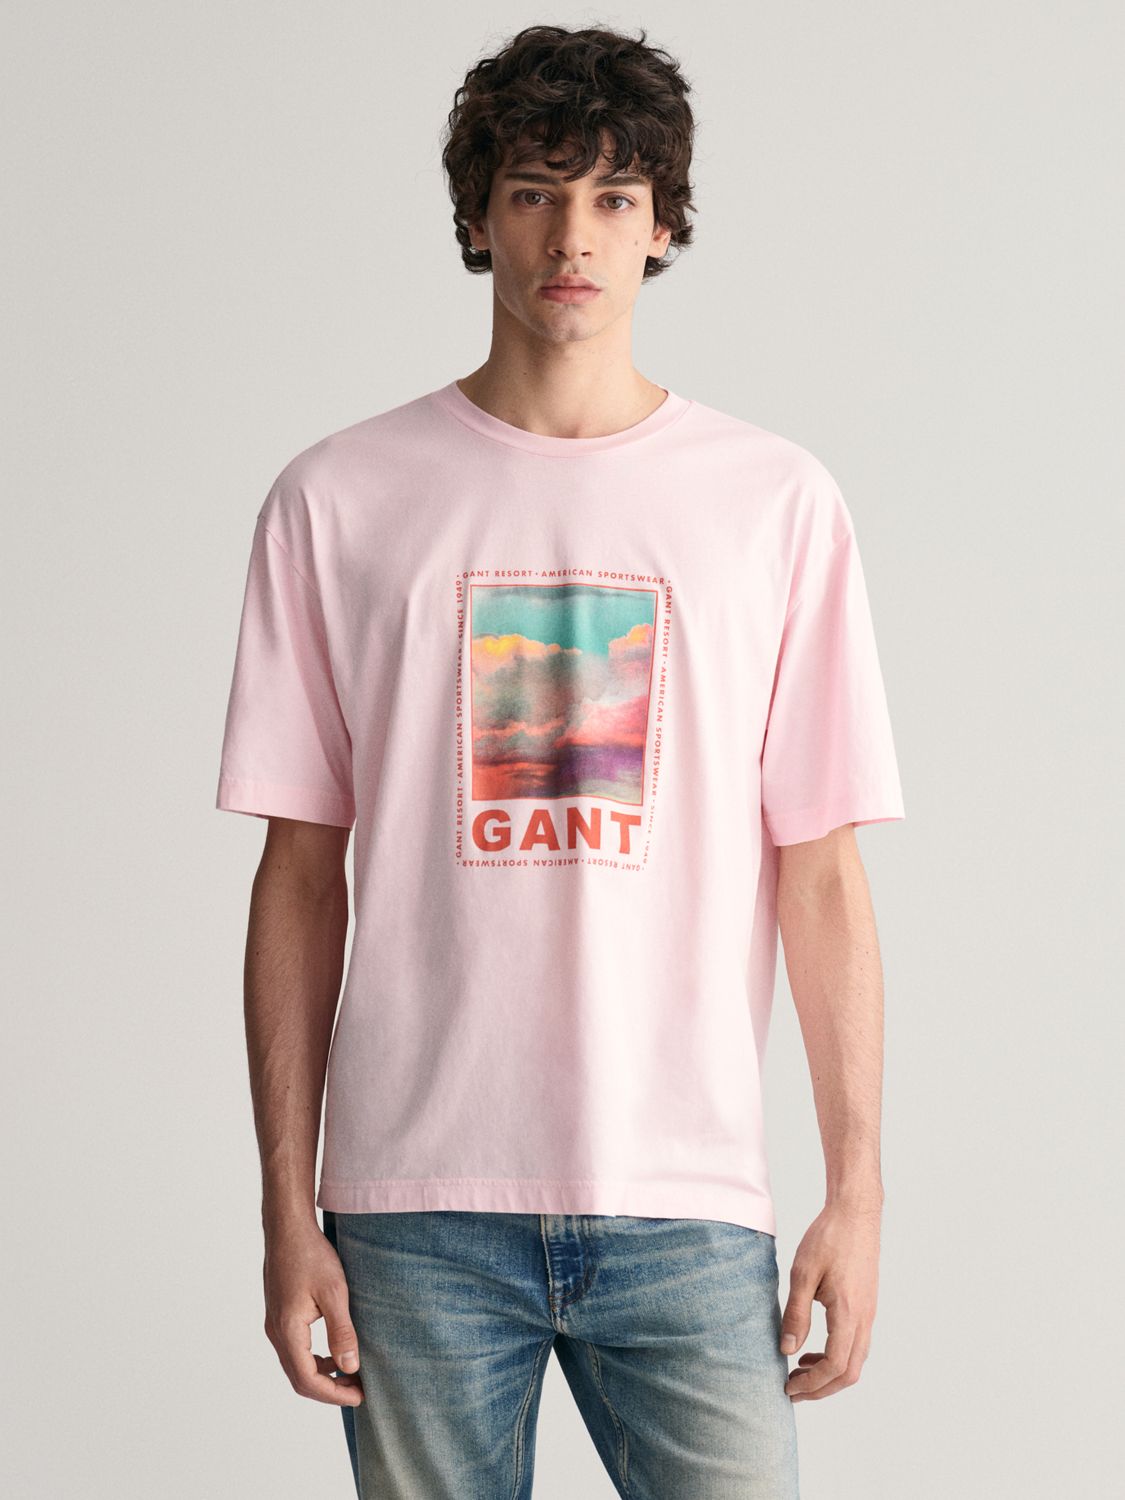 GANT Washed Graphic Short Sleeve T-Shirt, Pink/Multi, XL